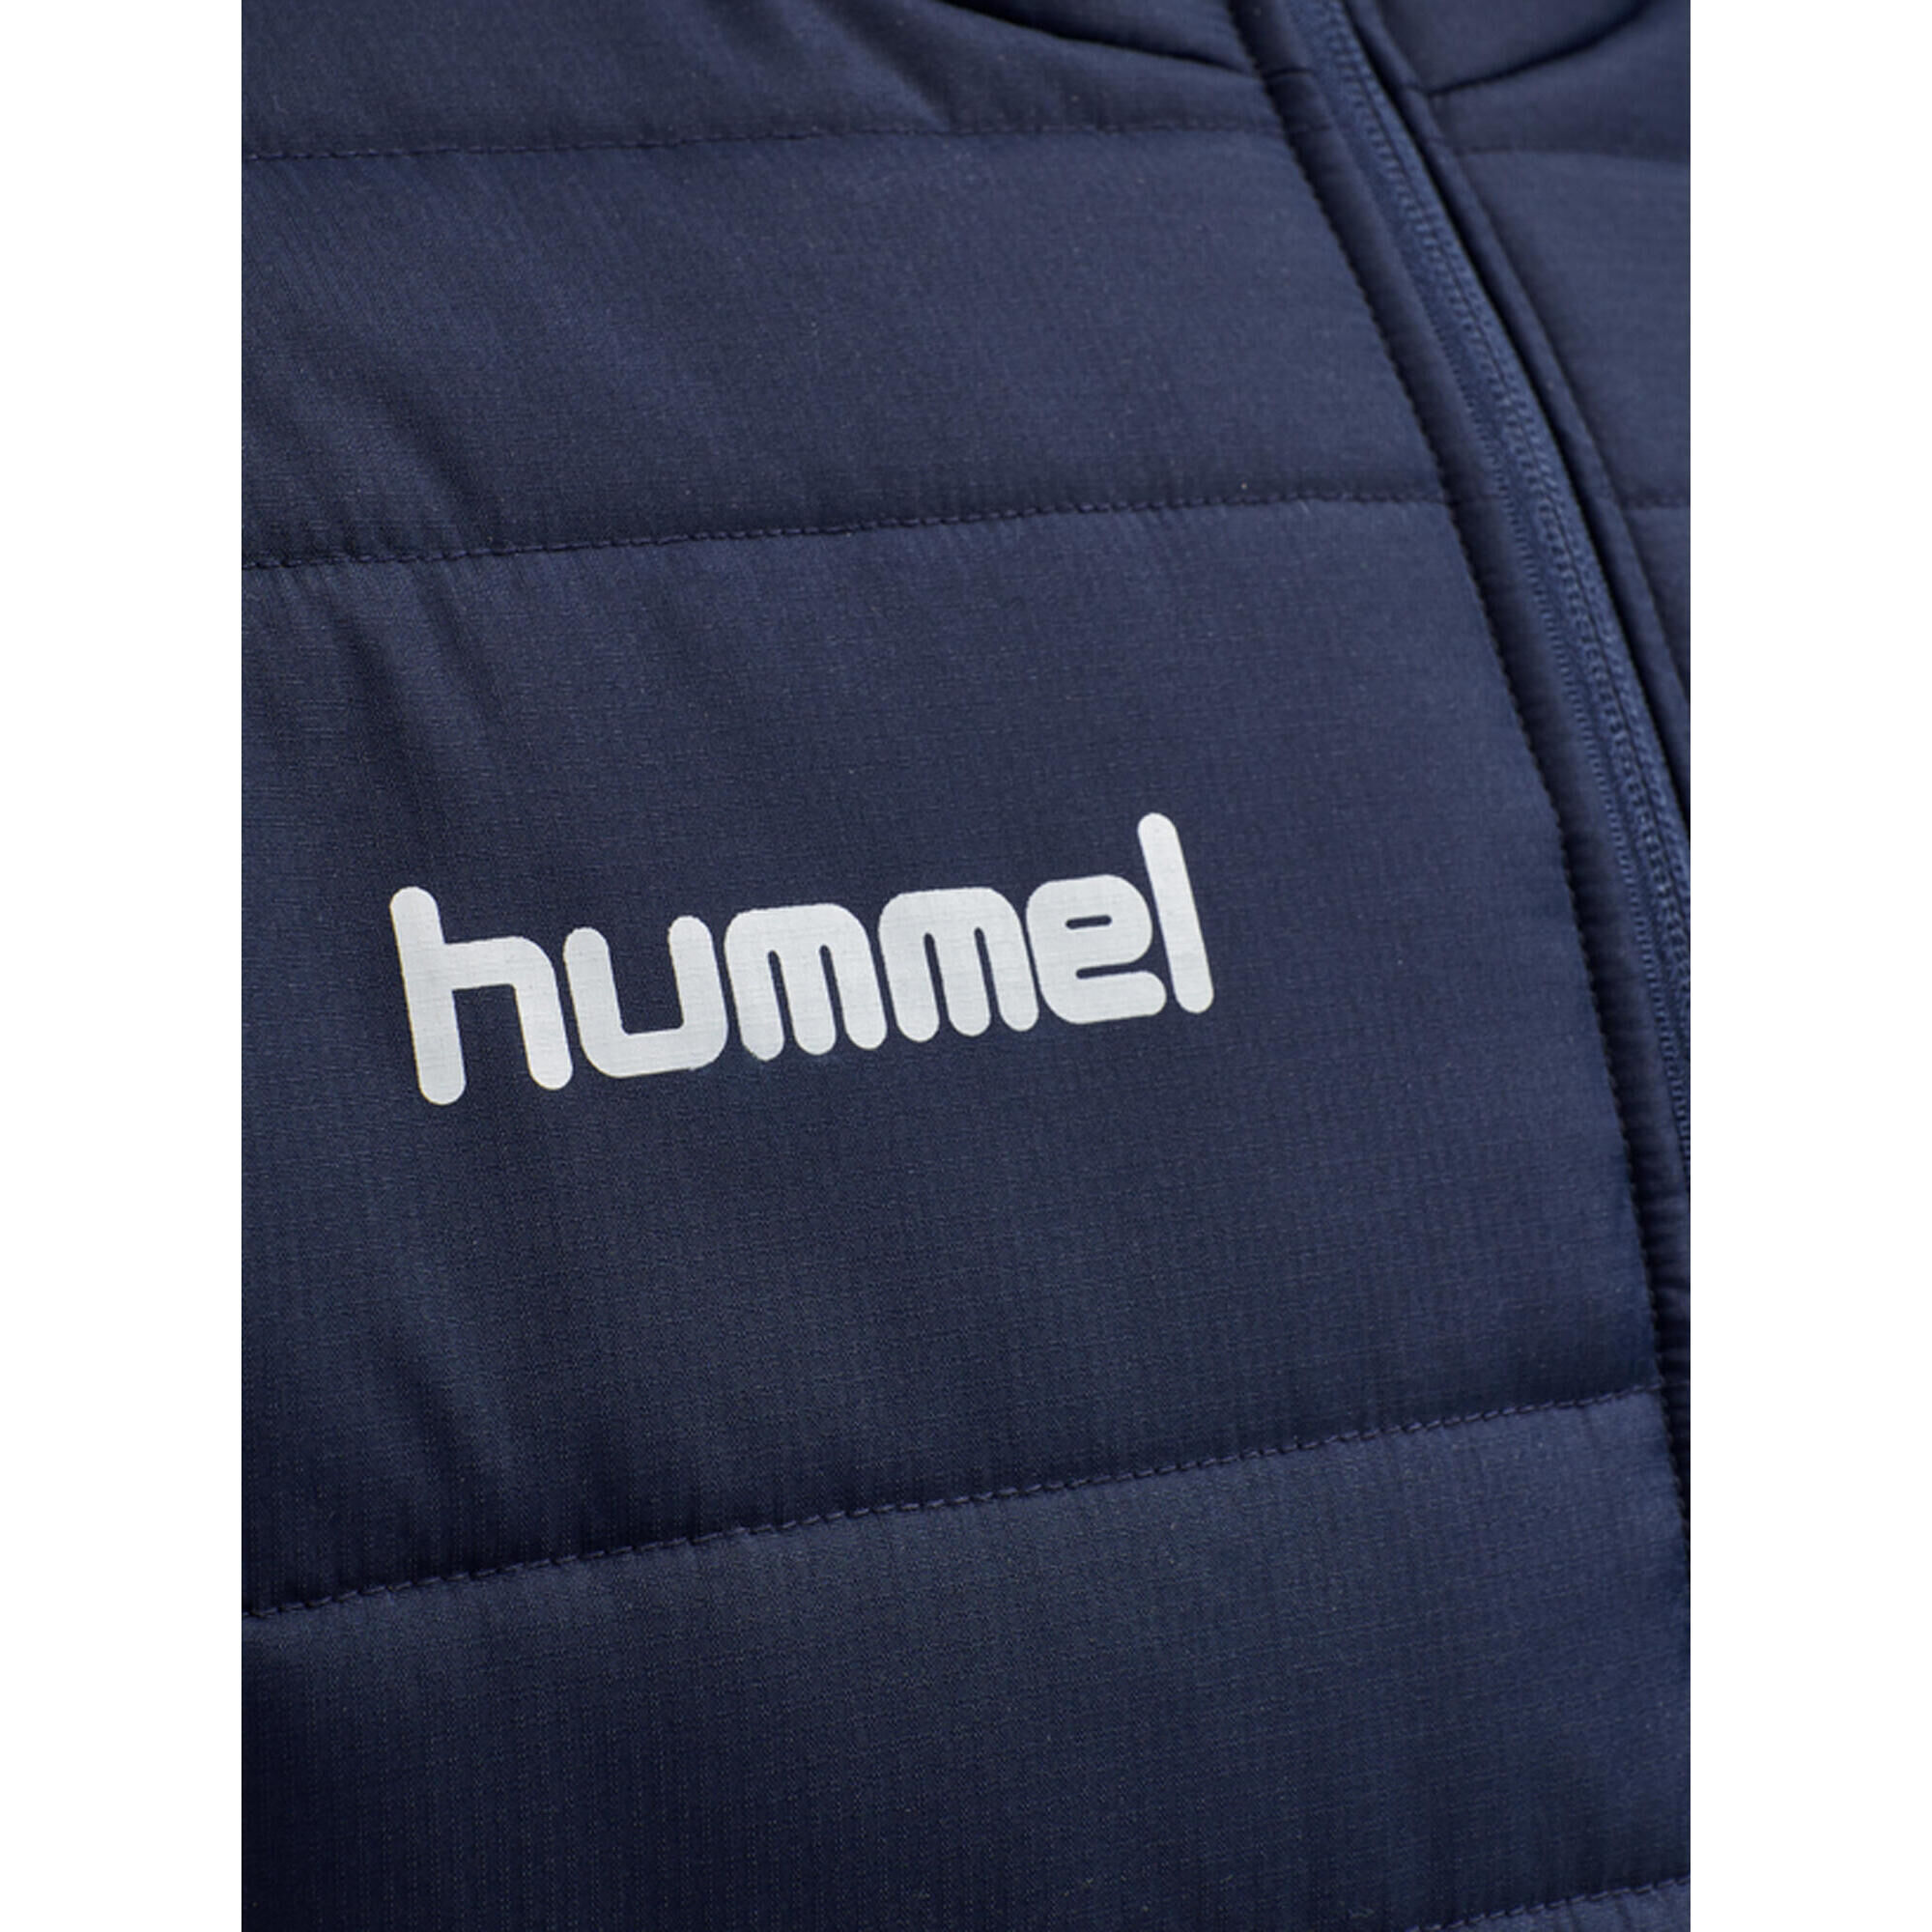 HUMMEL Short bench jacket for men, great for football, in marine